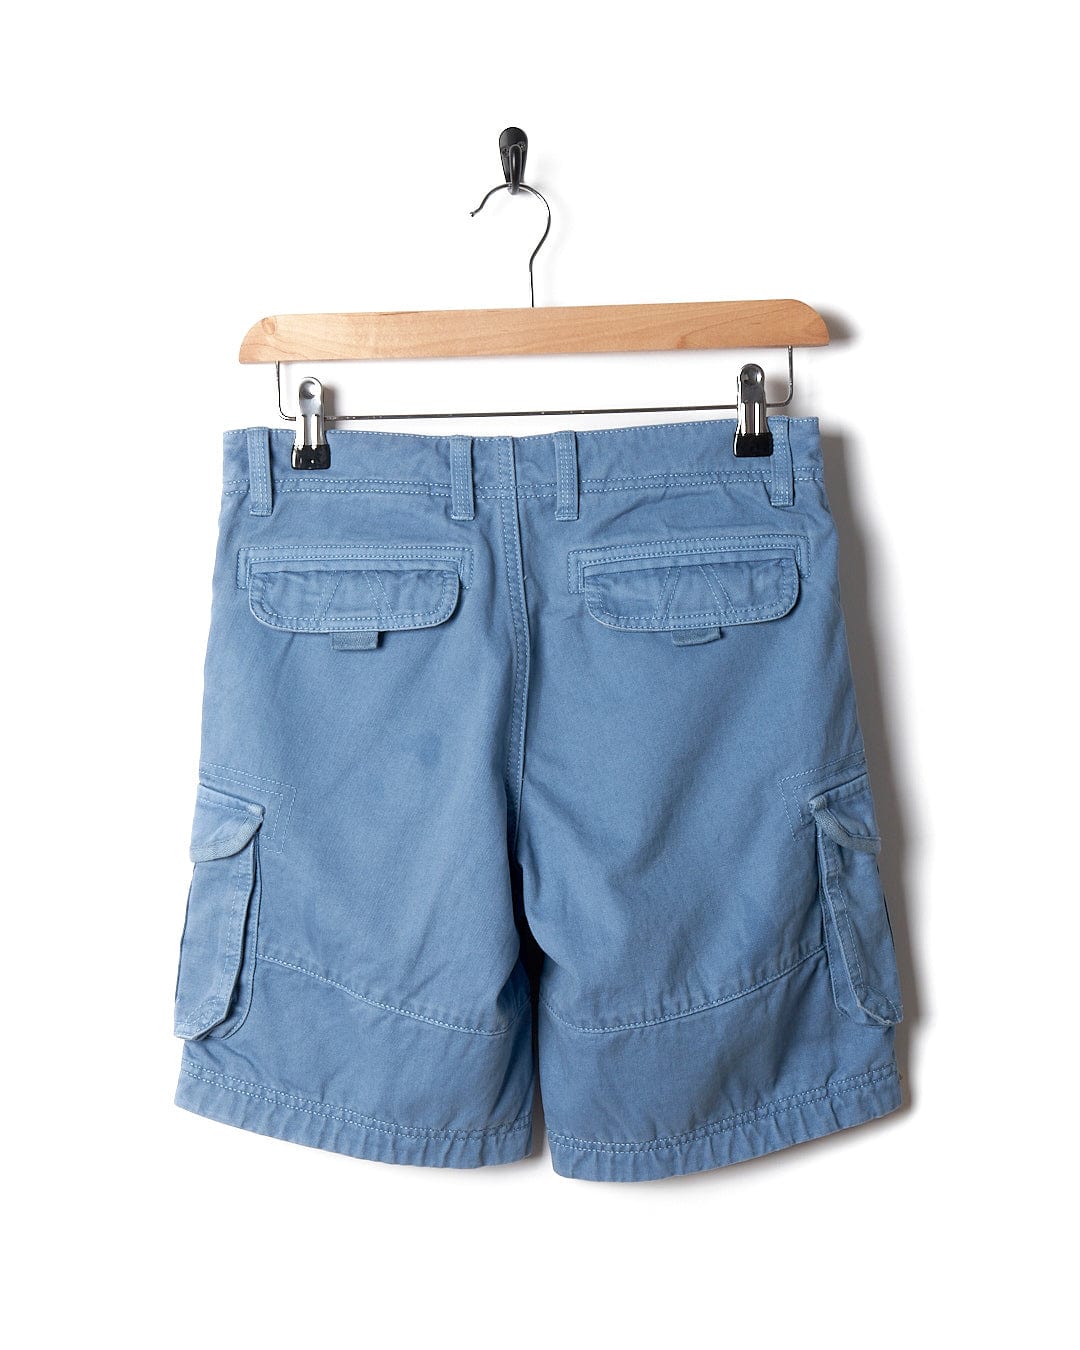 A pair of Saltrock Kaleb - Kids Cargo Shorts - Light Blue hanging on a hanger.